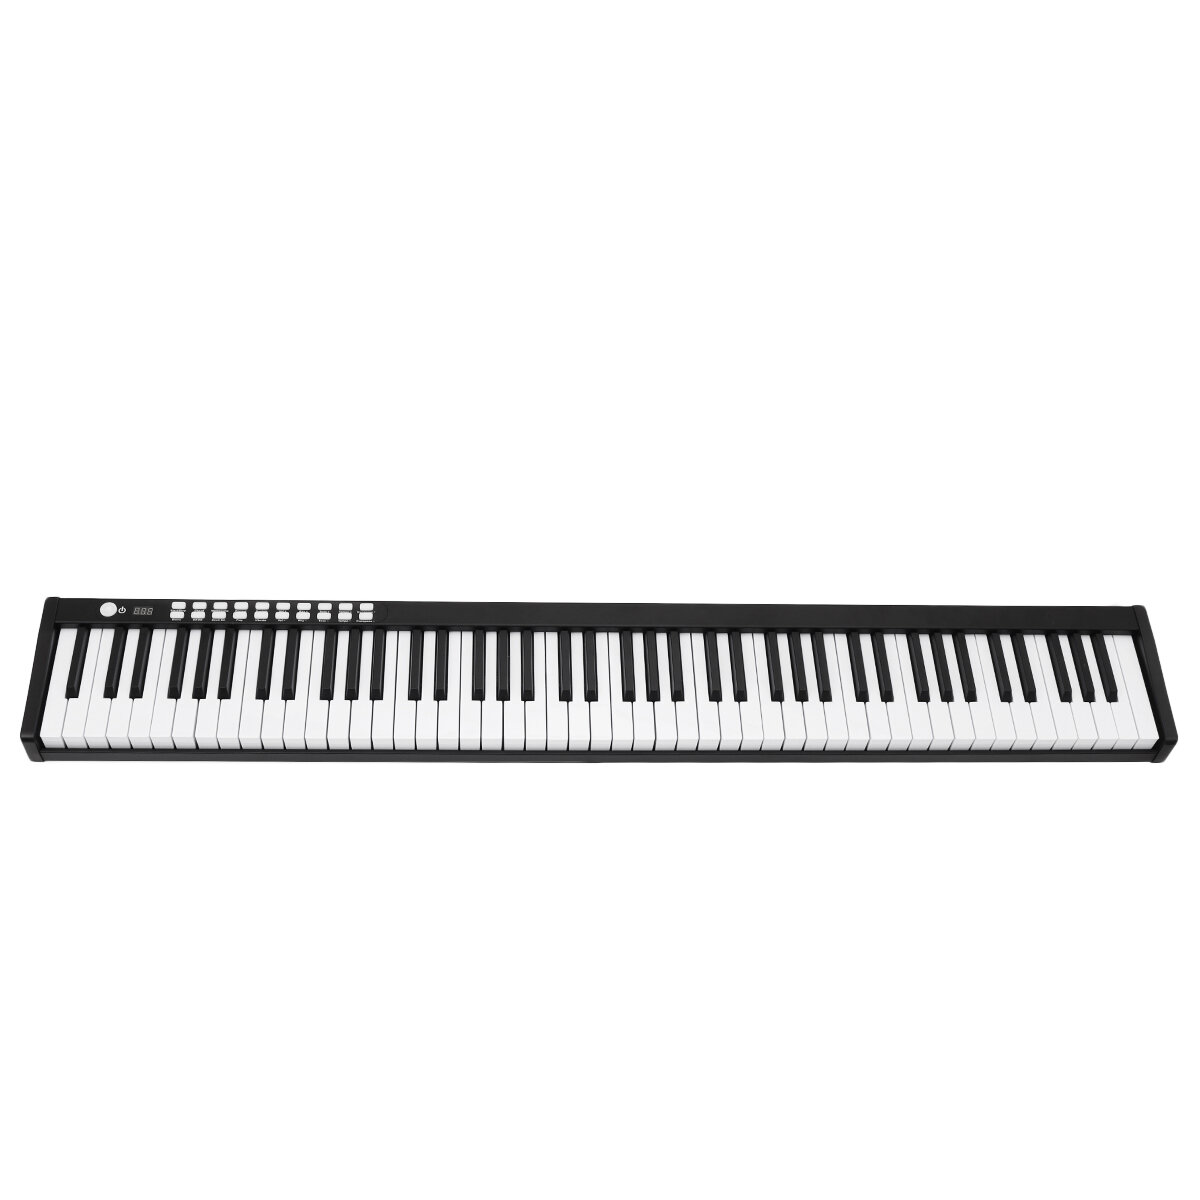 BORA BX-1A 88 Keys Portable Standard Digital KeyboardLED Keys Smart Electronic Piano